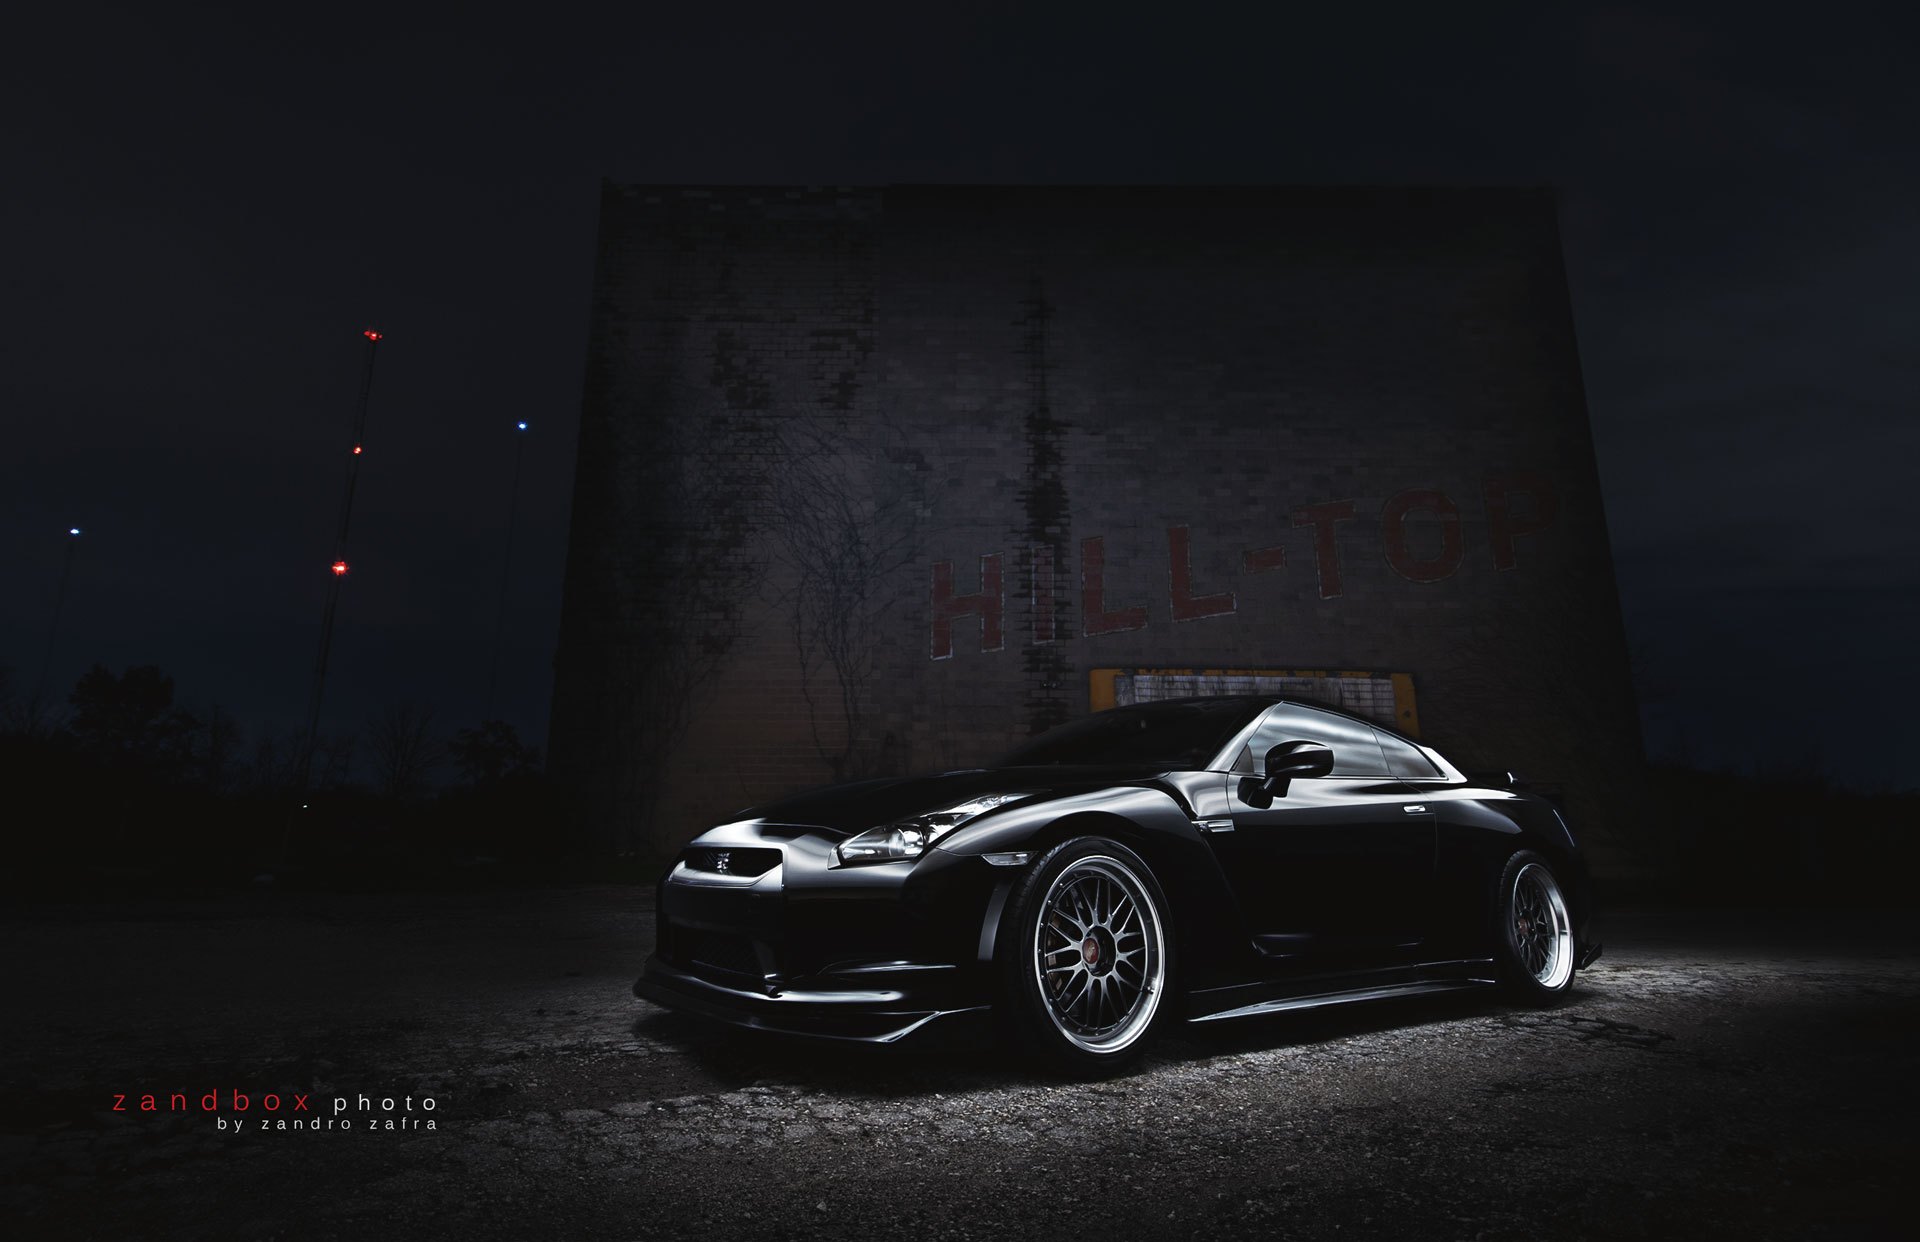 Custom Body Kit on Black Nissan GT-R - Photo by zandbox